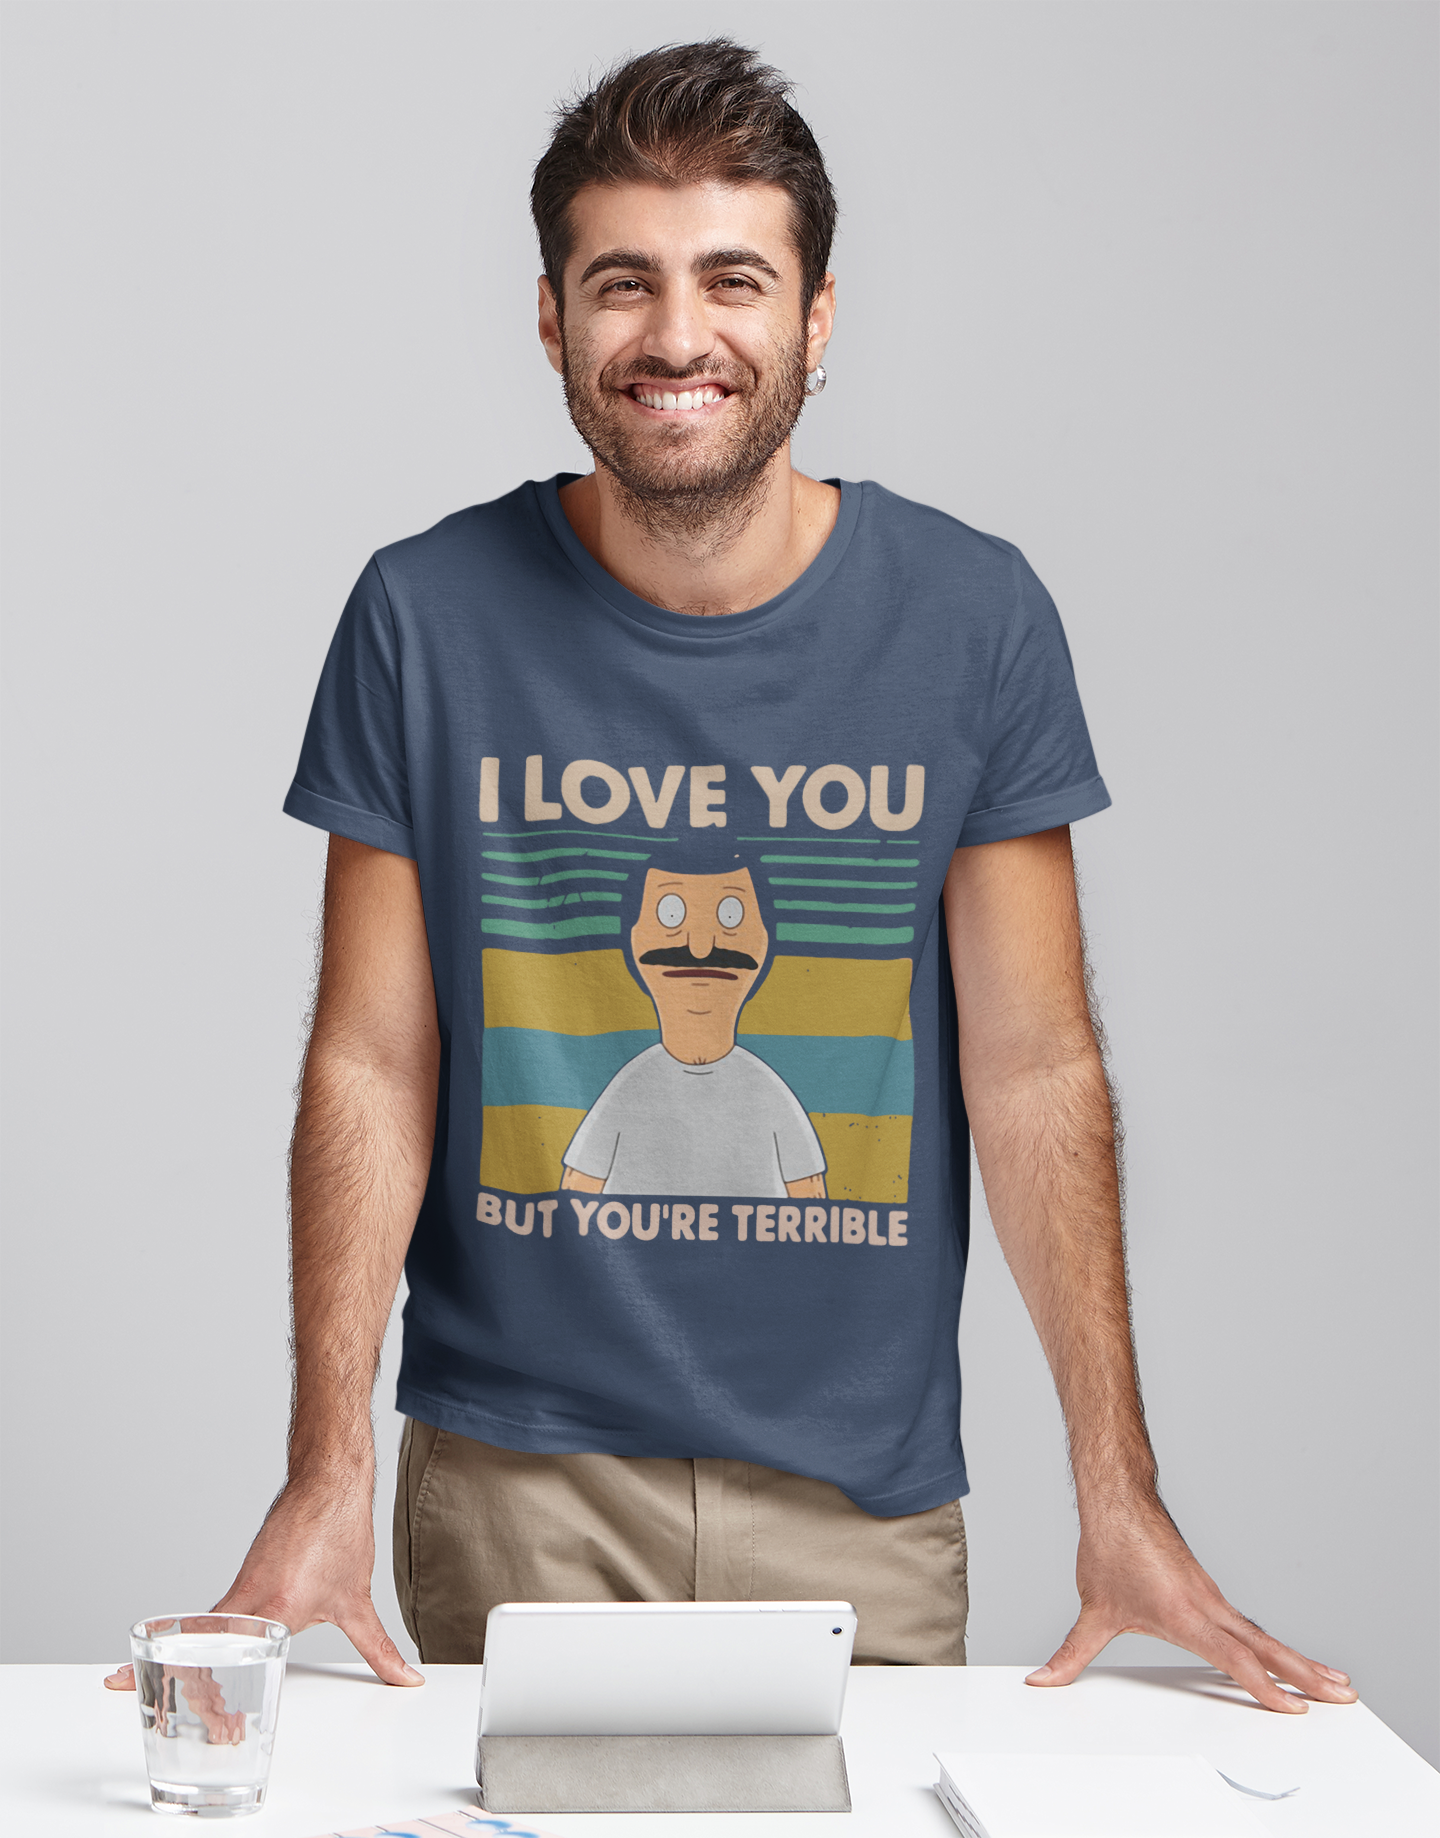 Bobs Burgers Vintage T Shirt, Bob Belcher T Shirt, I Love You But Youre Terrible Tshirt